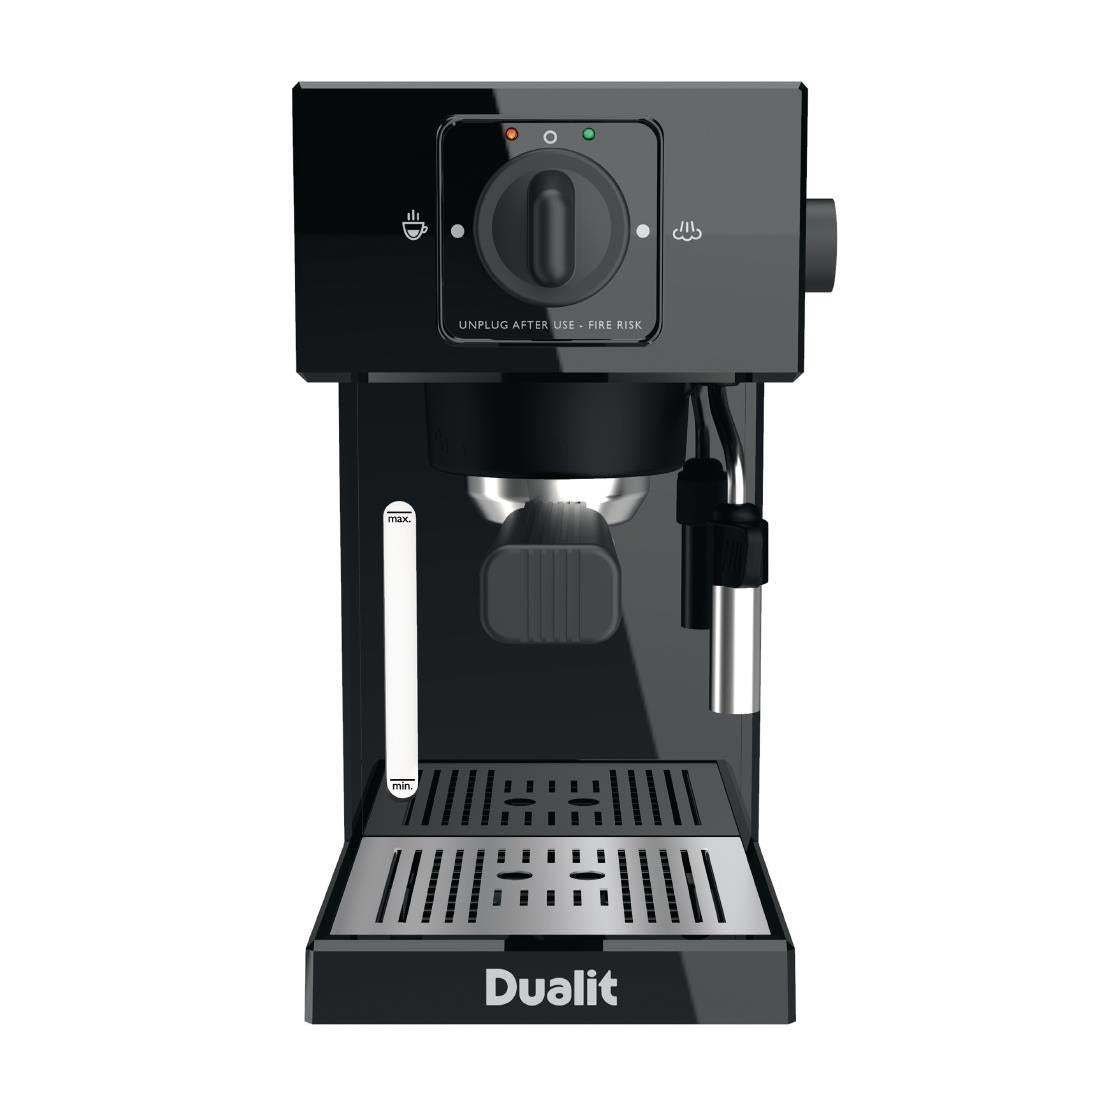 FN855 Dualit Espresso Coffee Machine